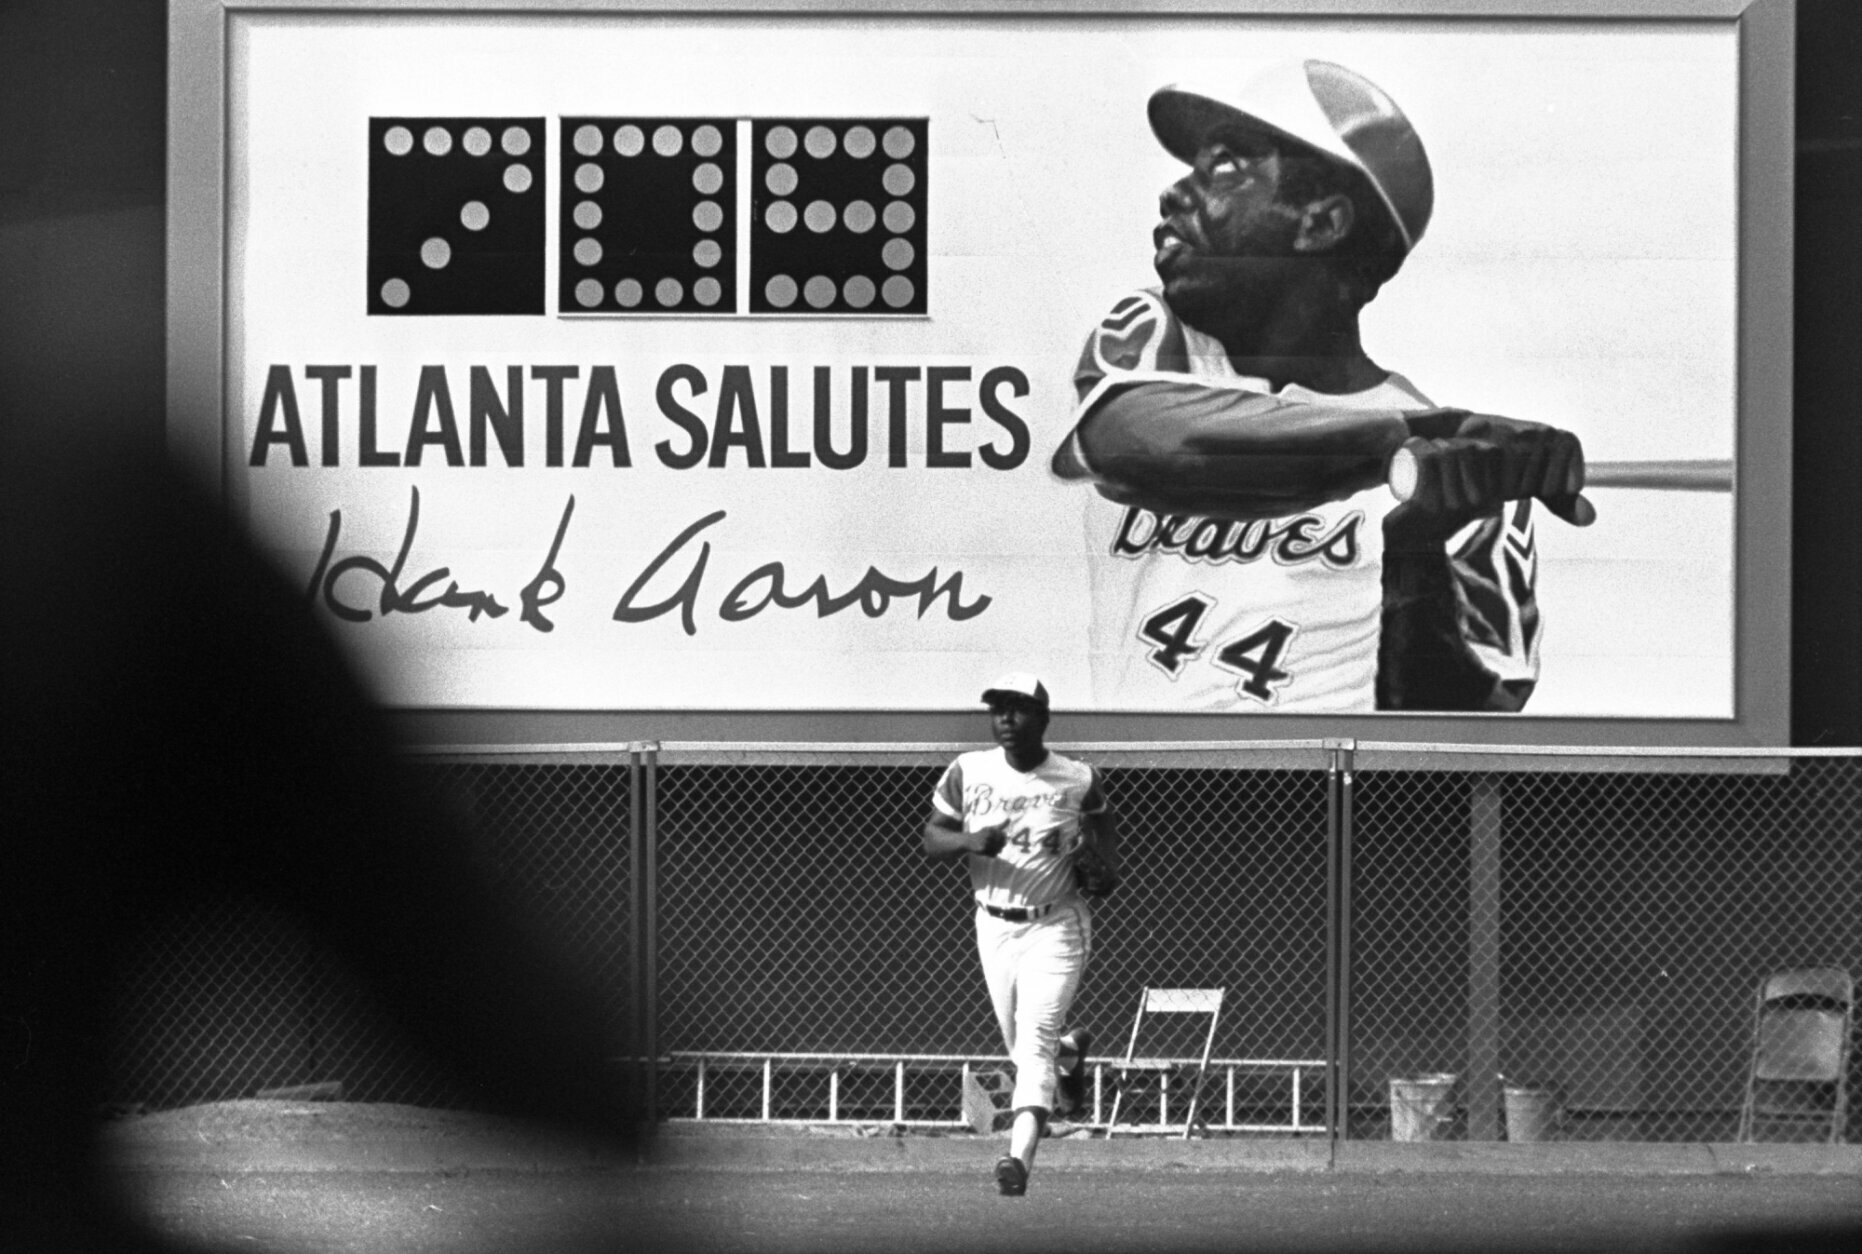 Hall of Famer, former home run king Hank Aaron dies at 86